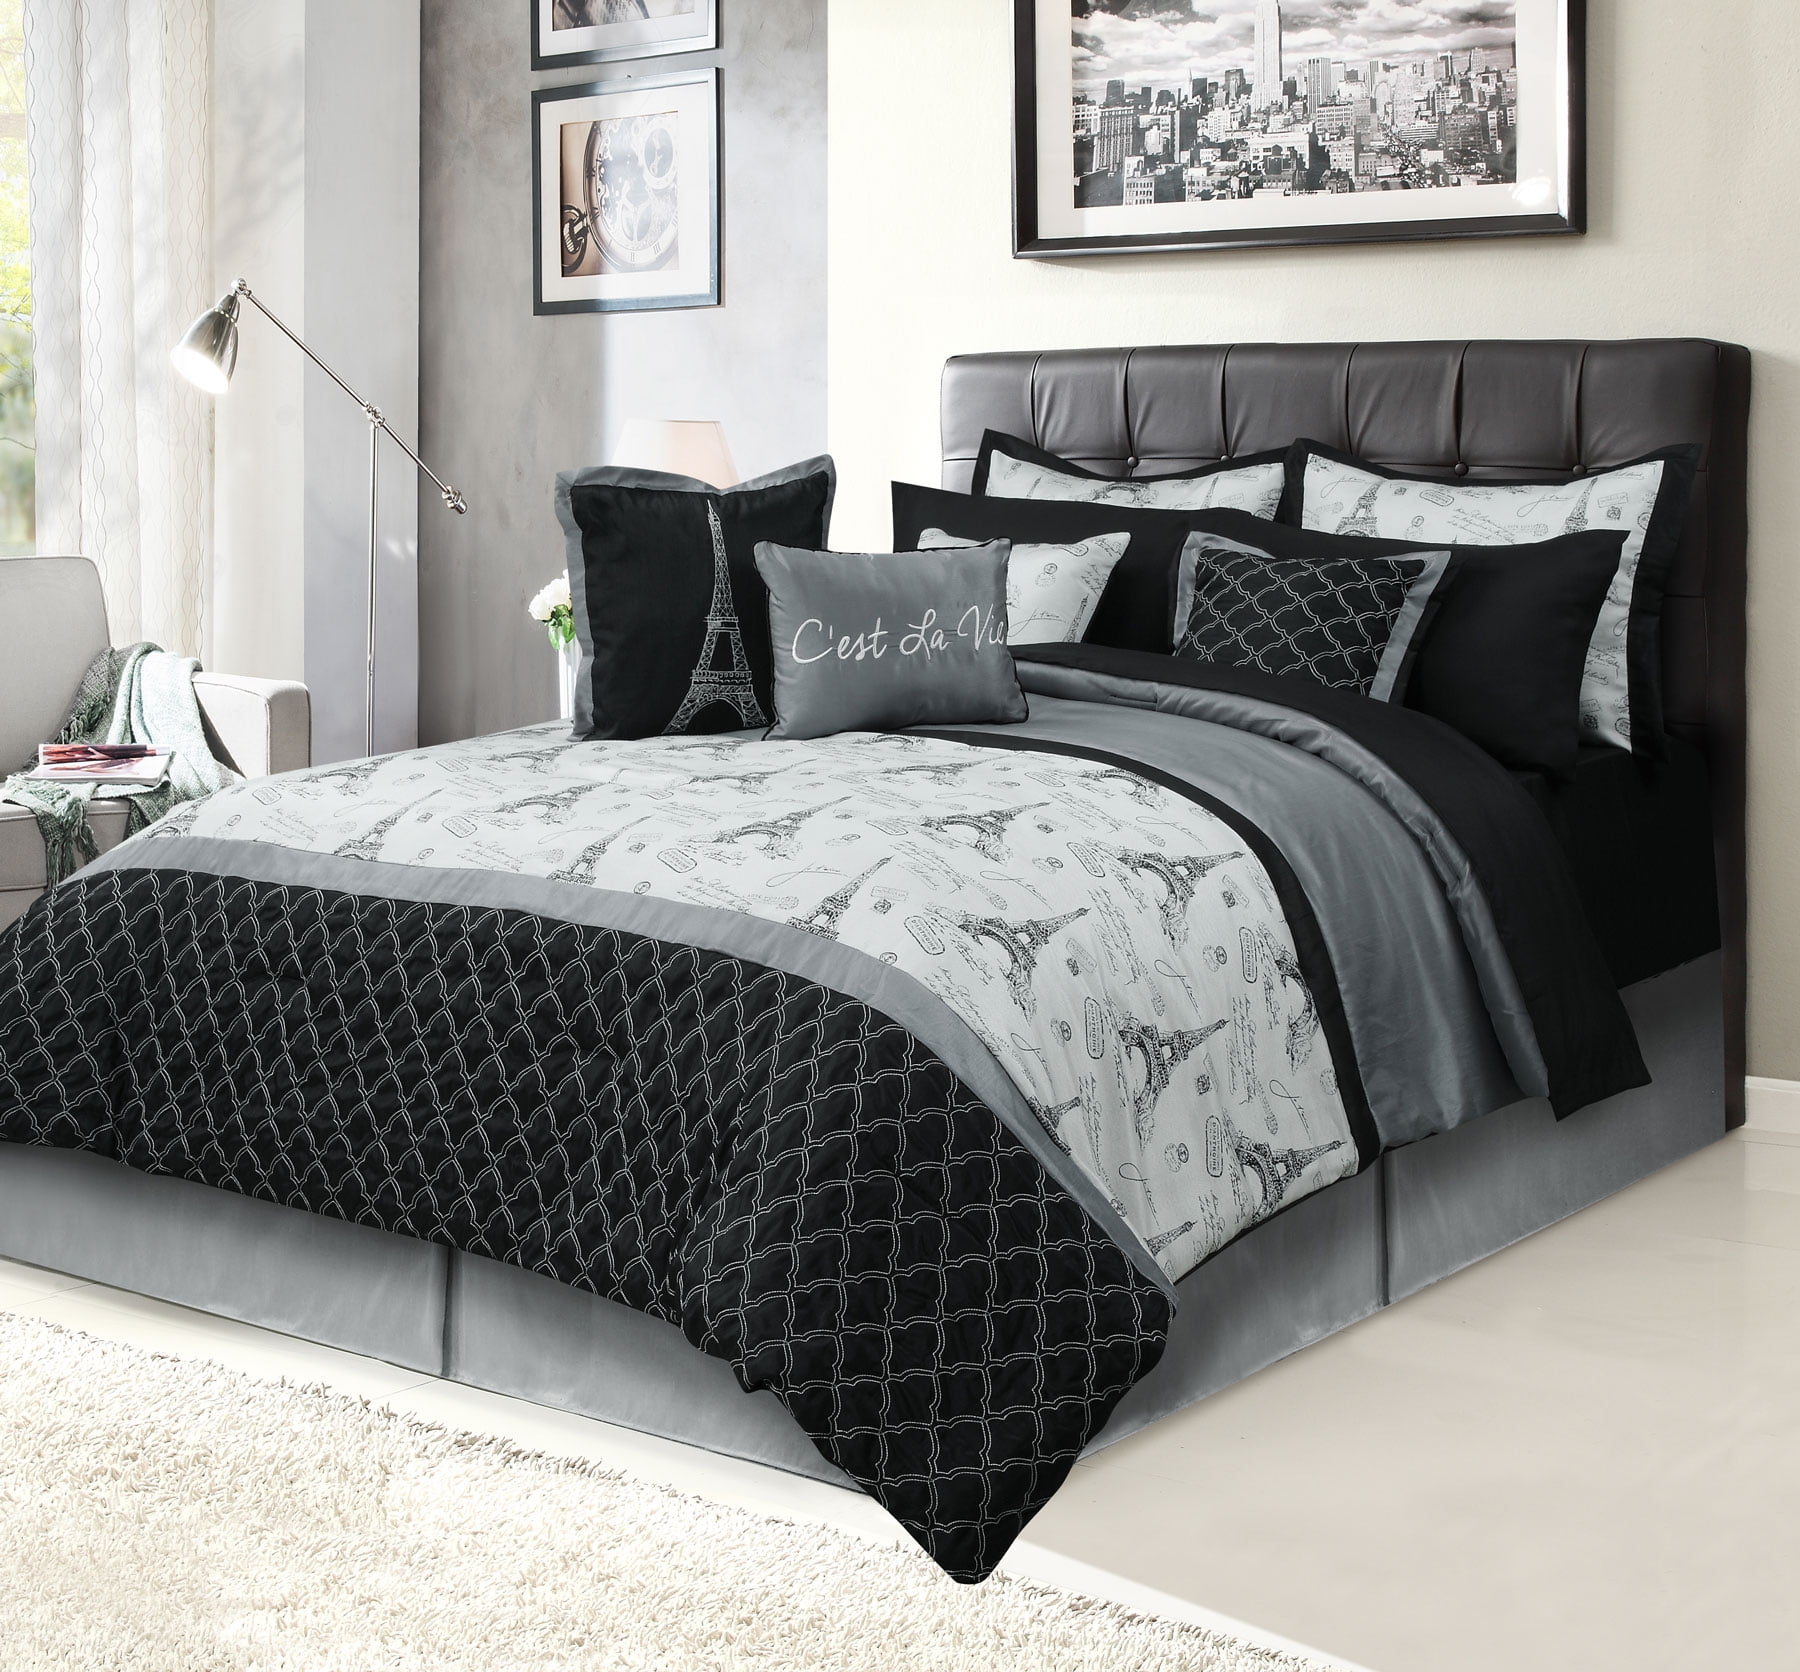 Paris Queen Bedding Bed In A Bag 12 Piece Set With Sheets Eiffel Tower Black And Gray Walmart Com Walmart Com